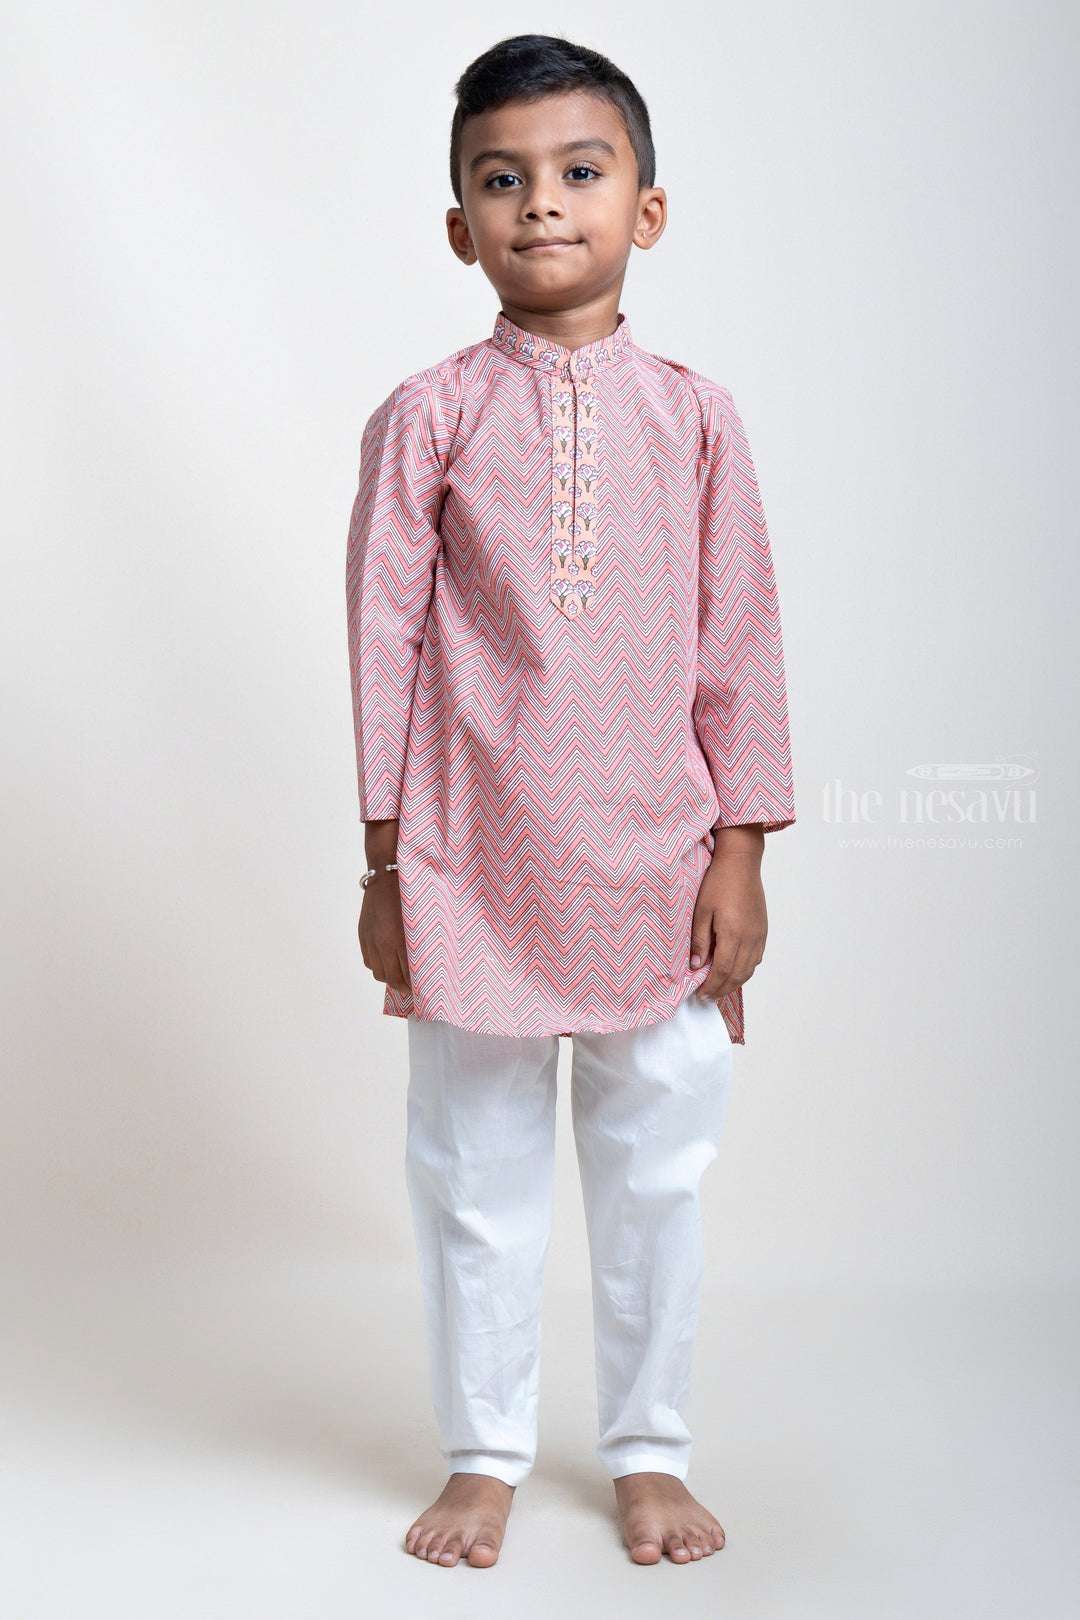 The Nesavu Boys Kurtha Set Ajrak Printed ZigZag Pink Cotton Kurta And White Pyjama For Little Boys psr silks Nesavu 16 (1Y) / Pink / Cotton BES274